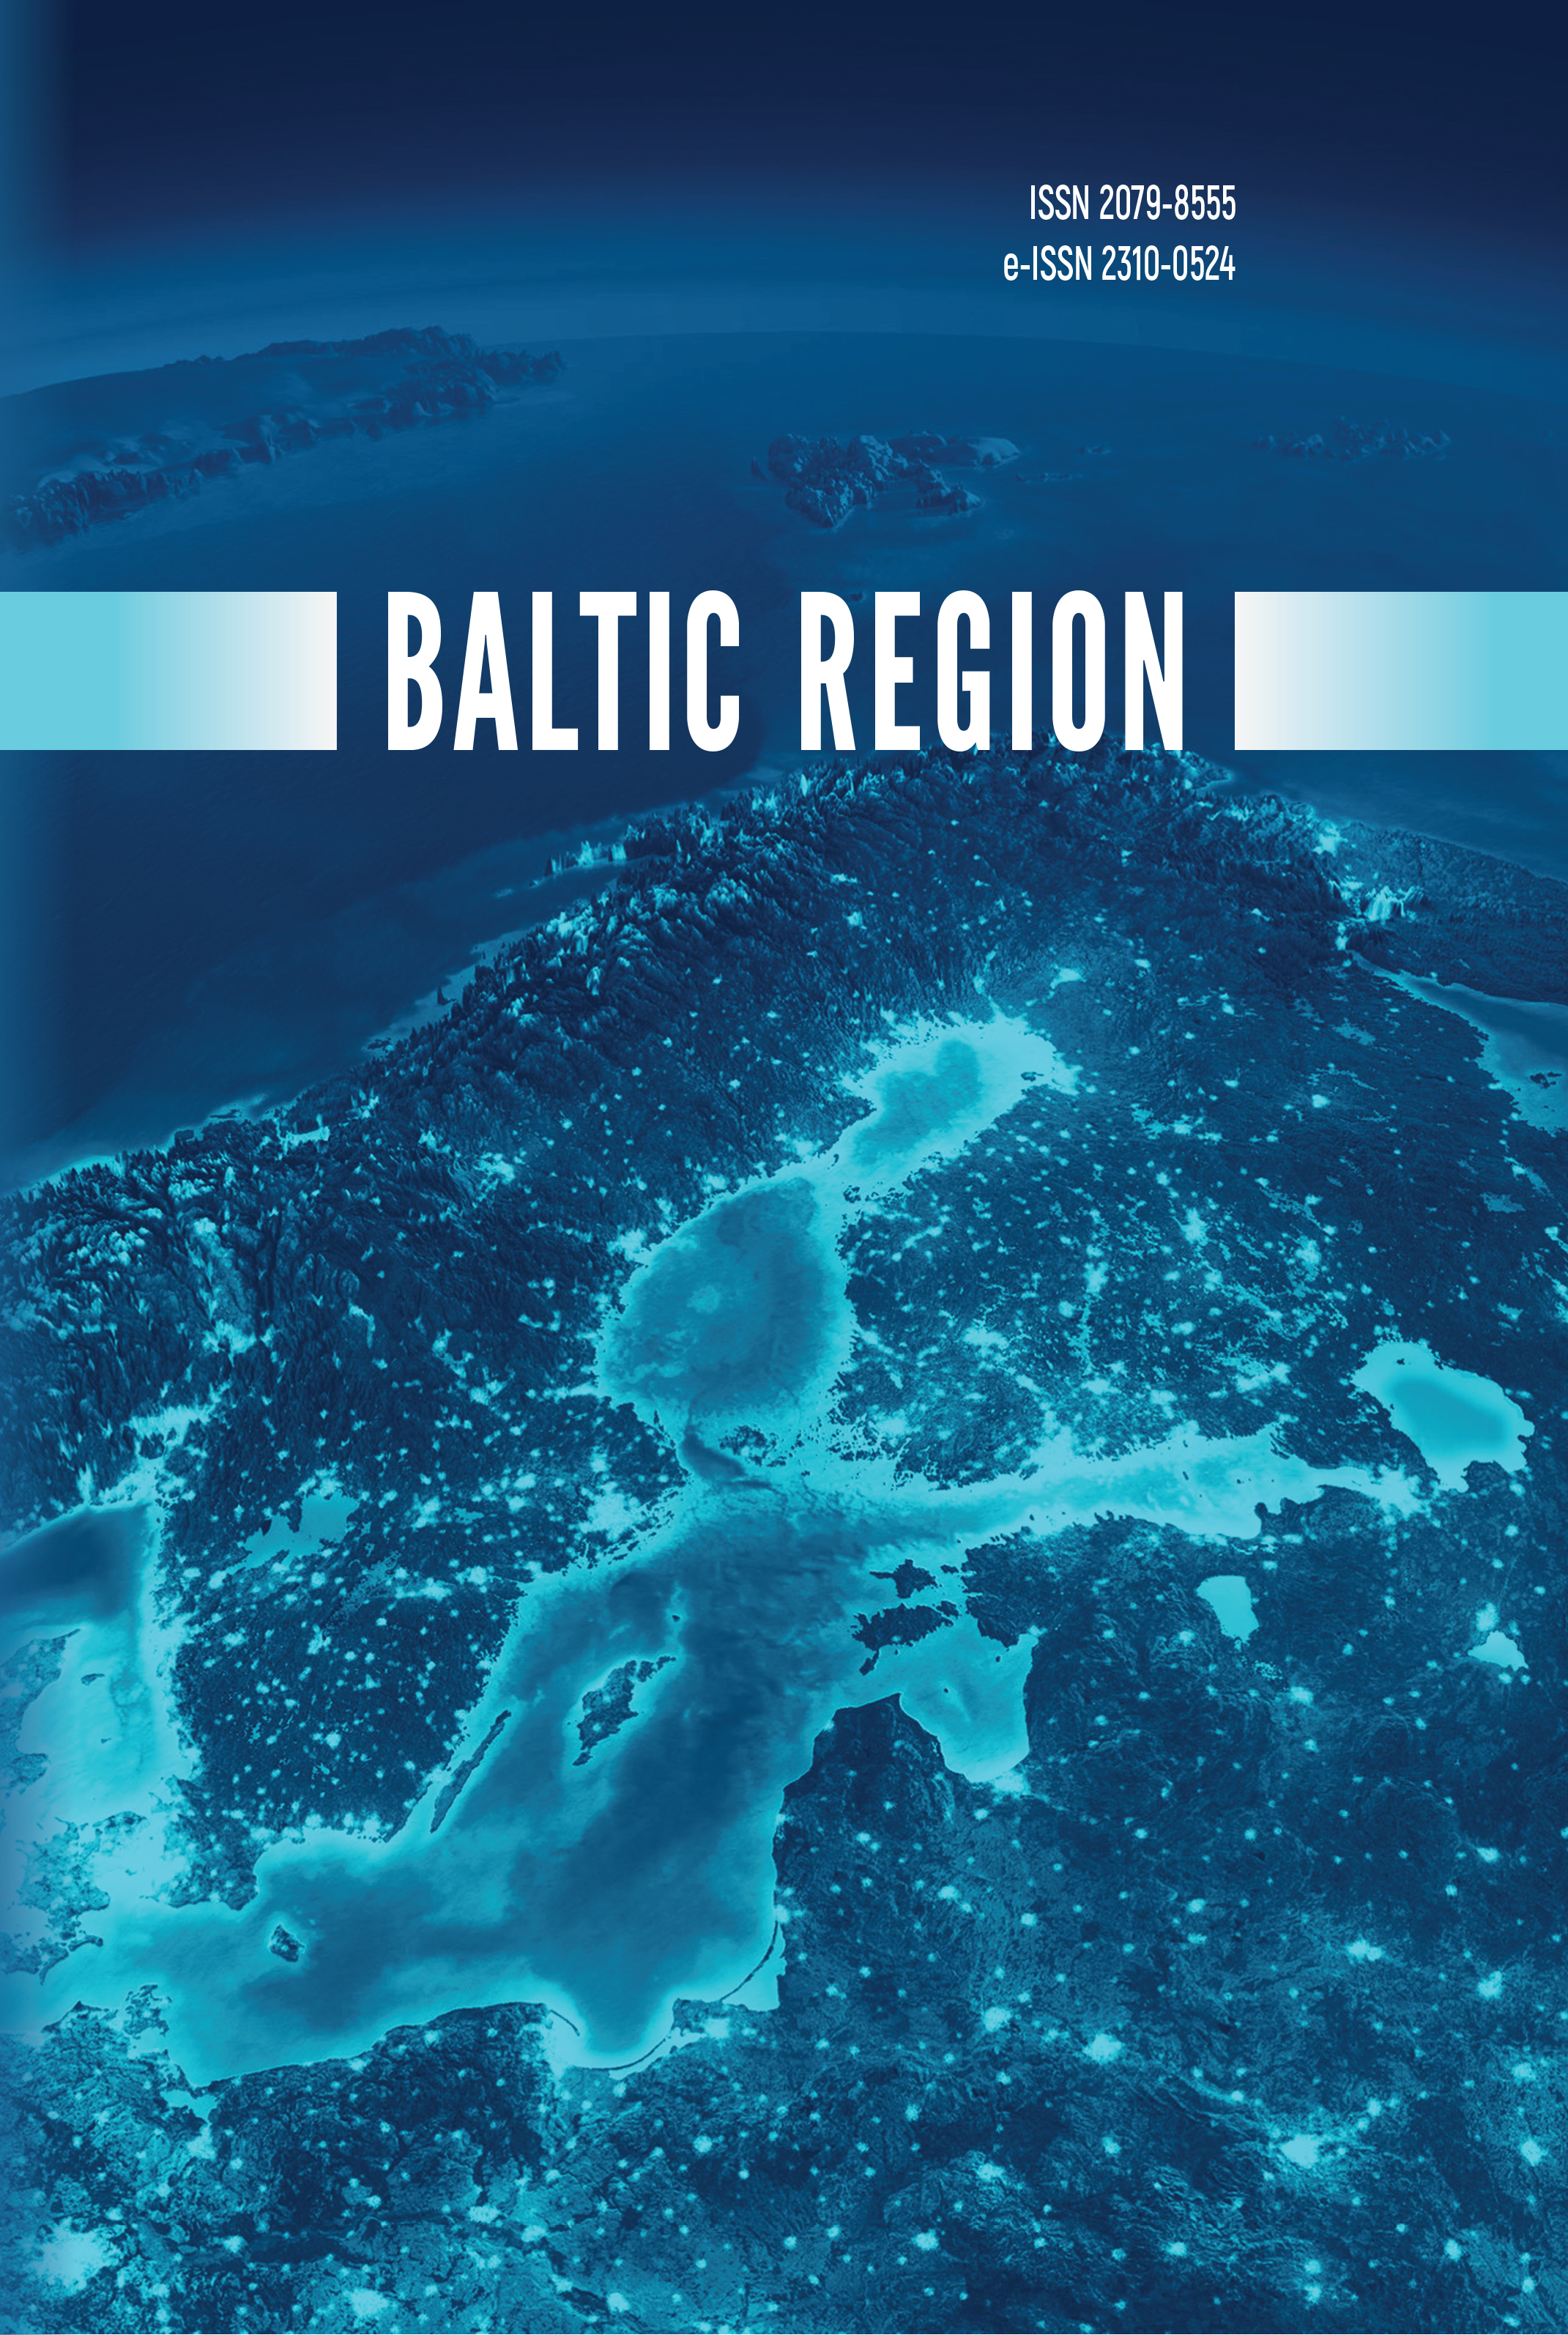 Обложка журнала «Baltic Region»